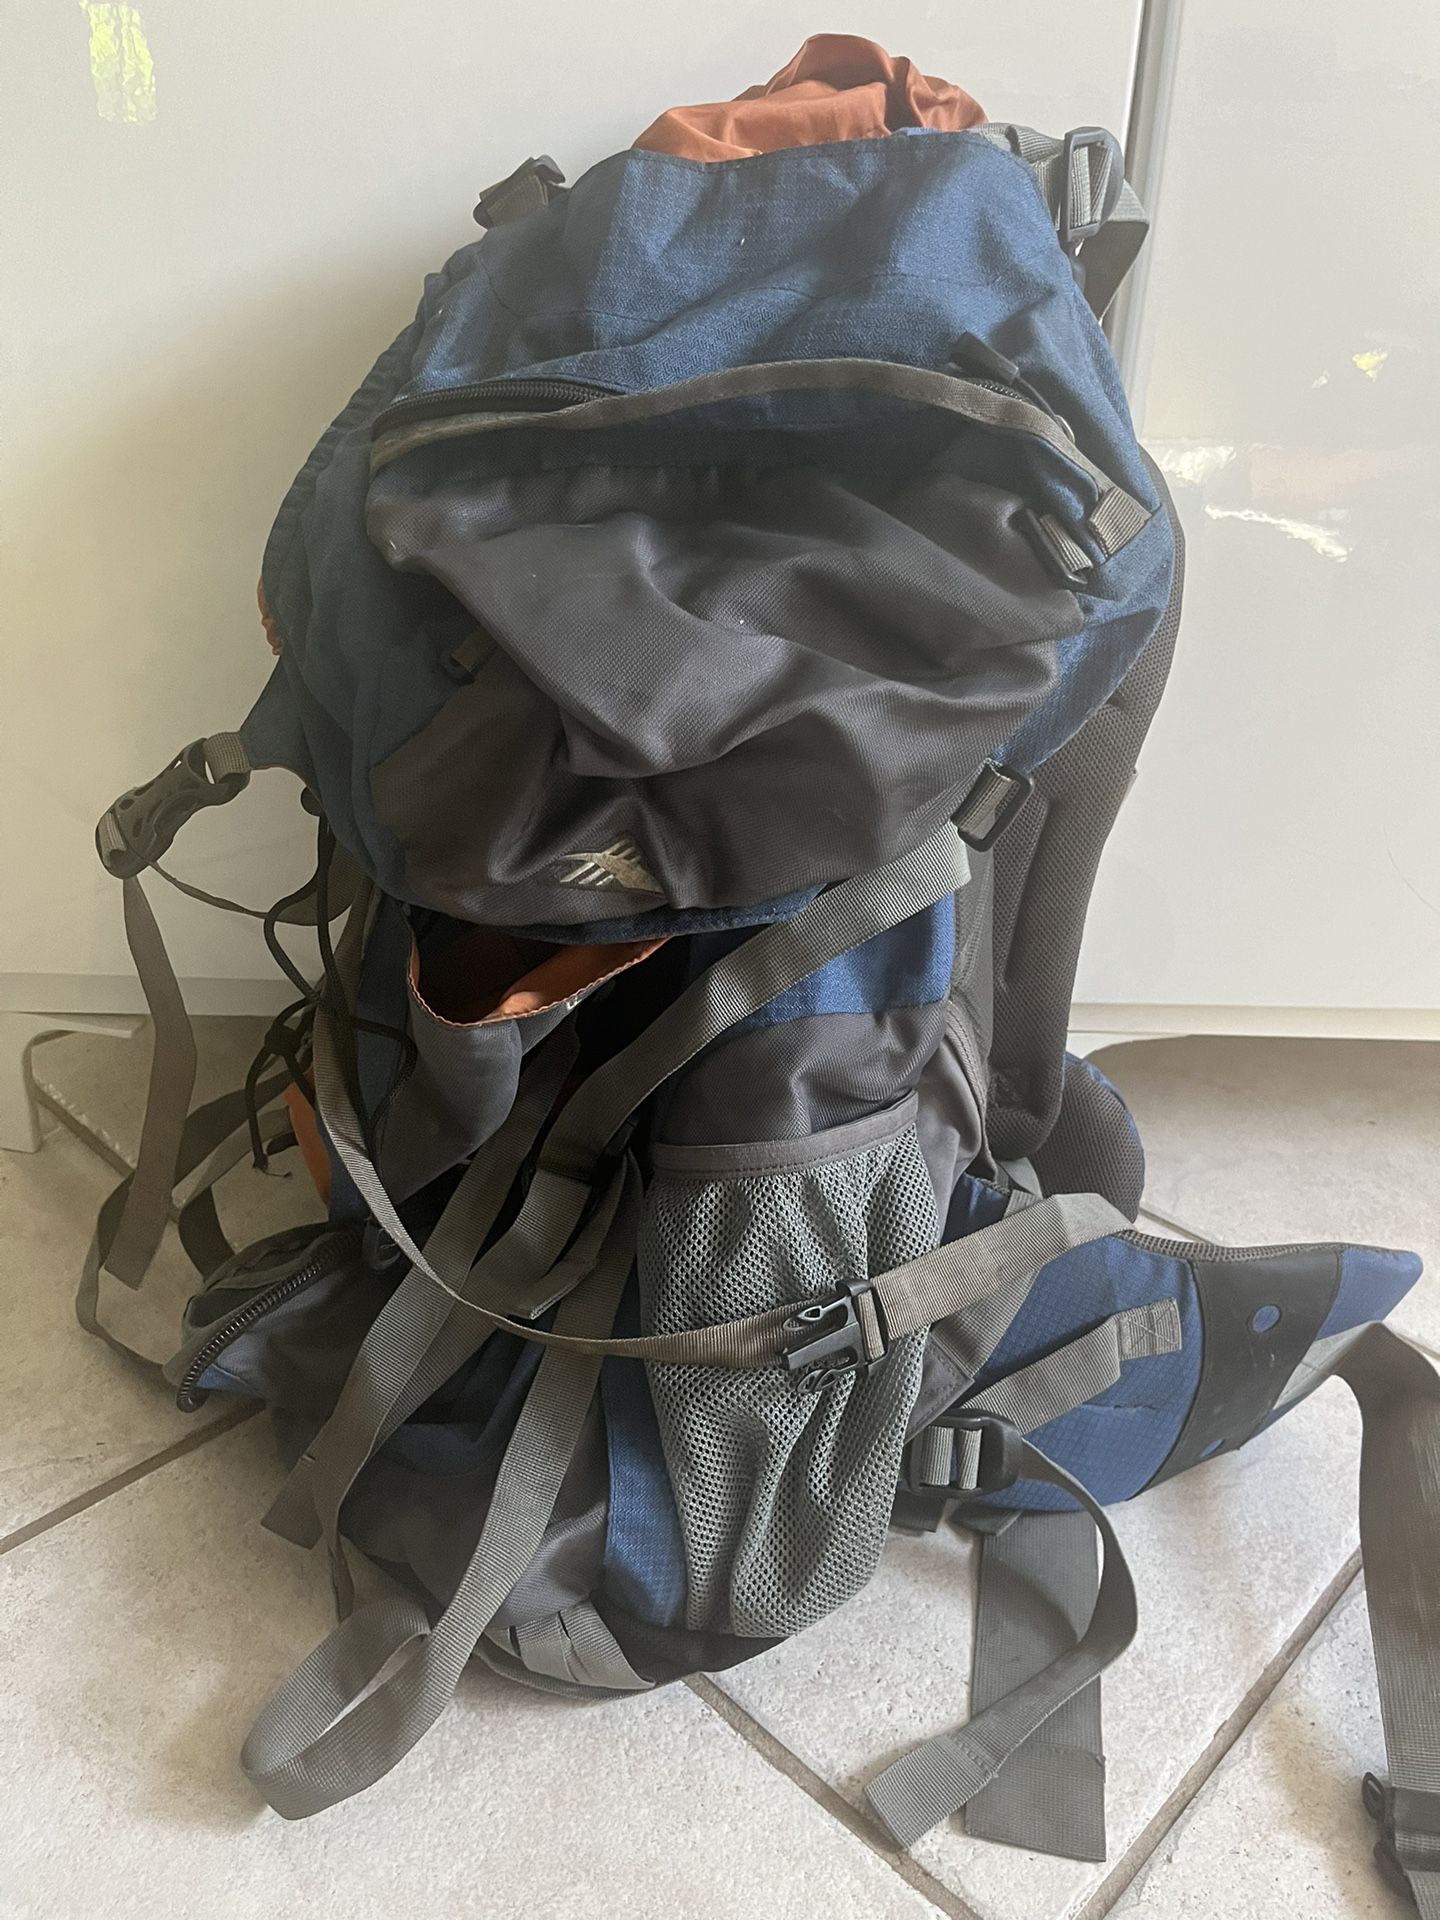 Backpacking Backpack 